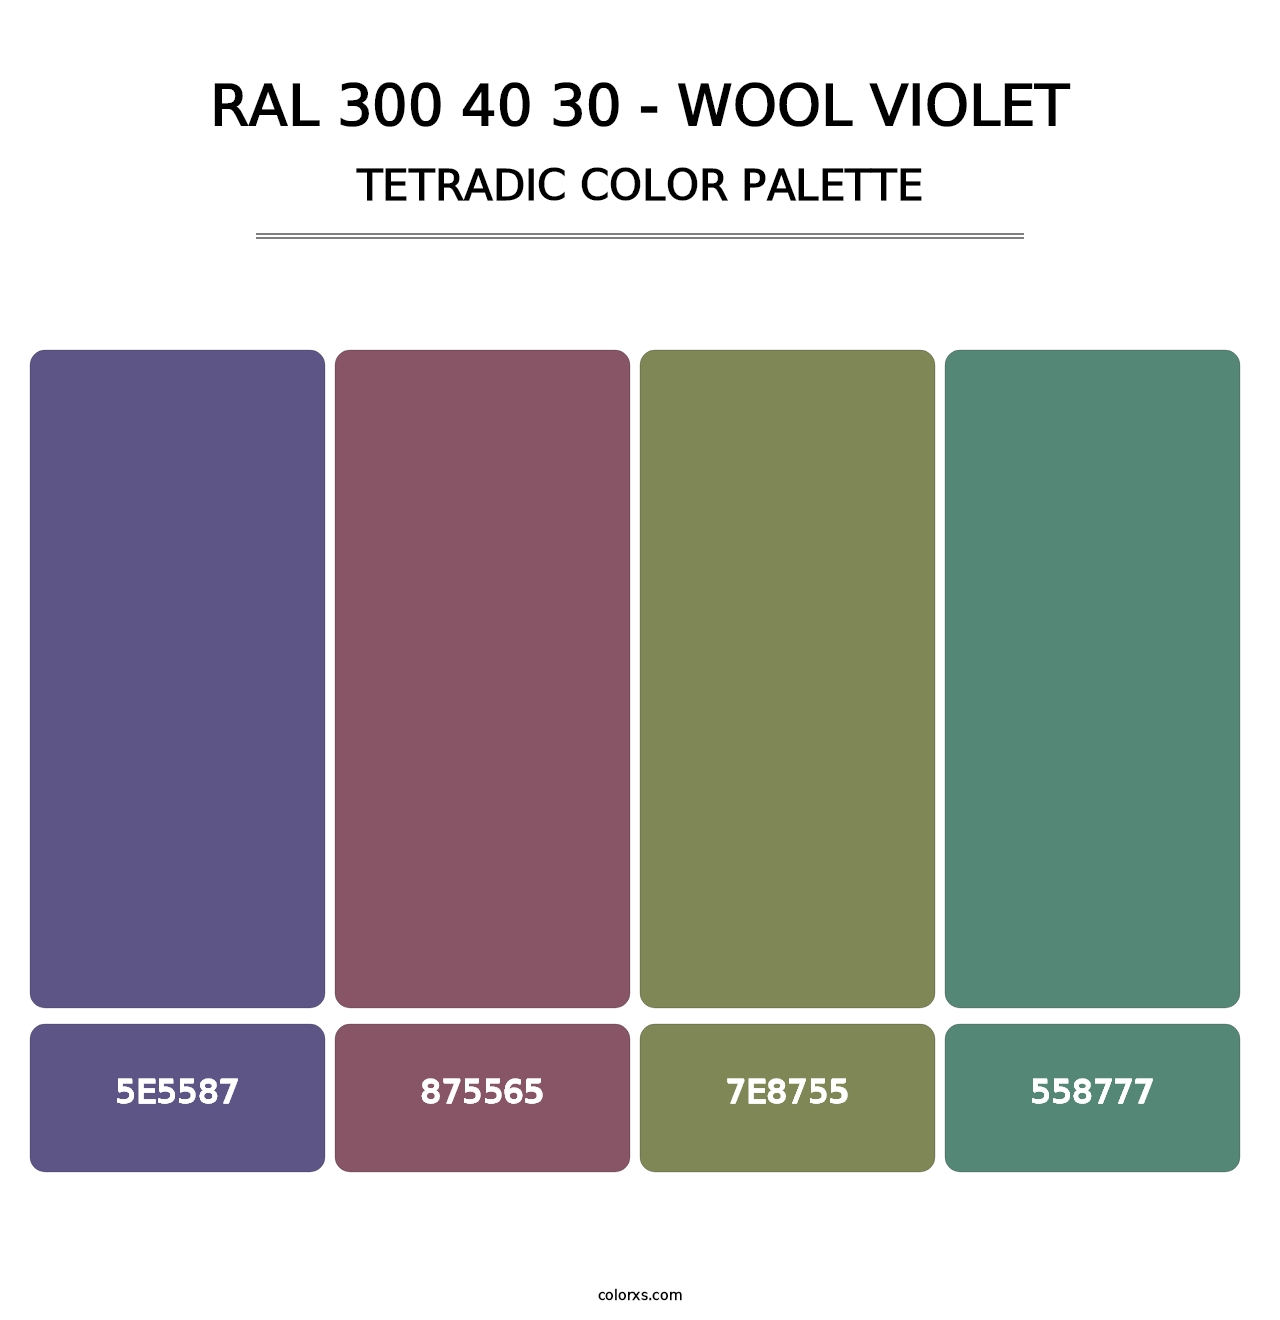 RAL 300 40 30 - Wool Violet - Tetradic Color Palette